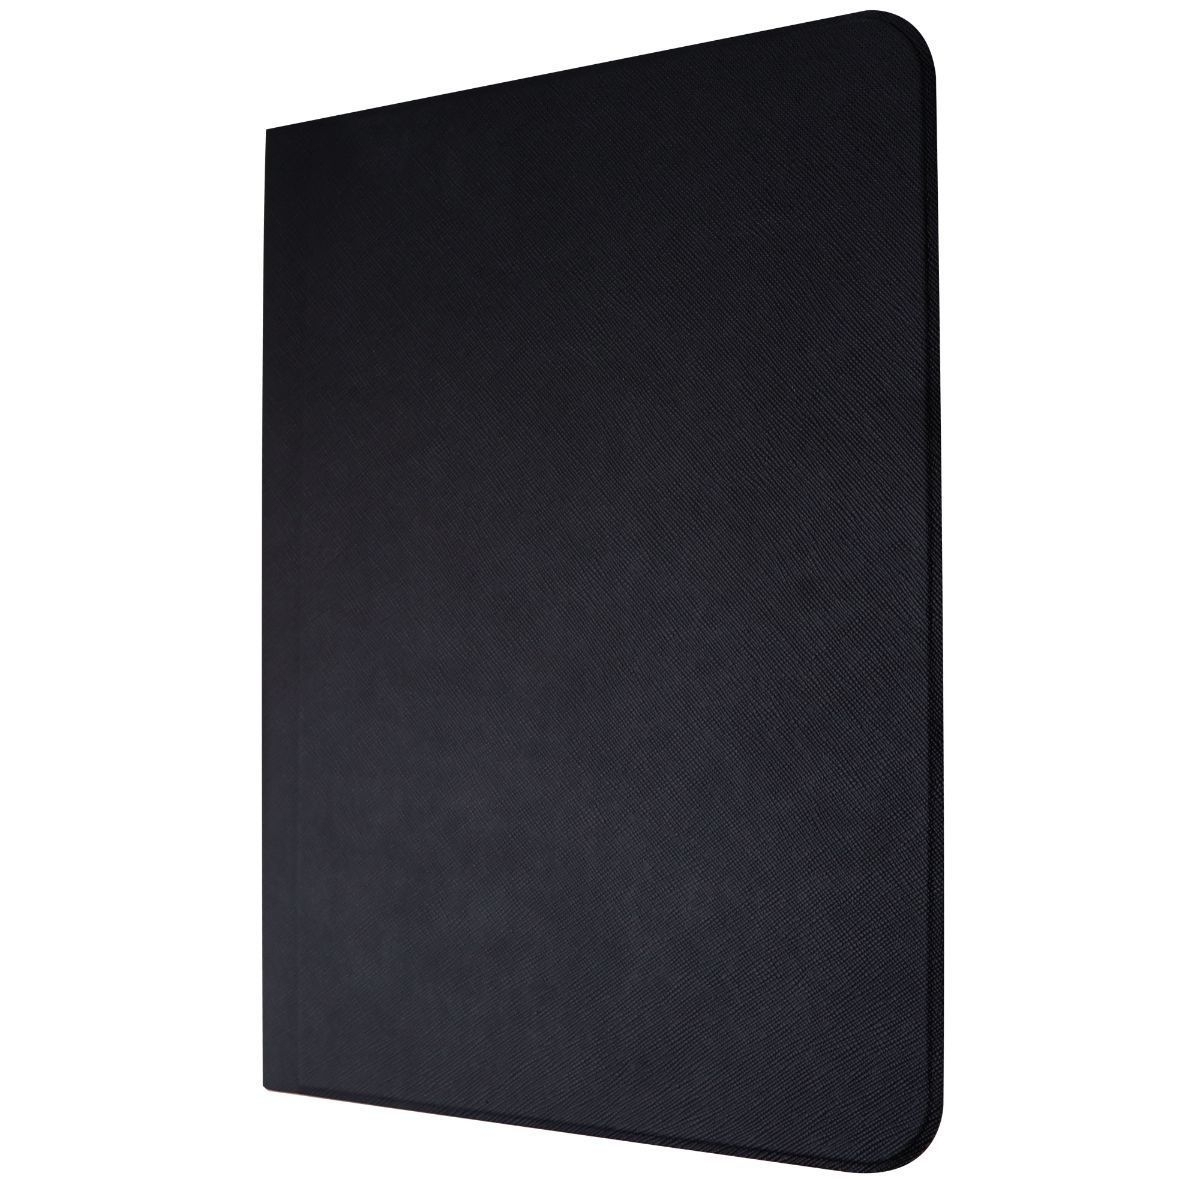 PureGear Universal Folio Case For 9 To 10 Inch Tablets - Black (Refurbished)